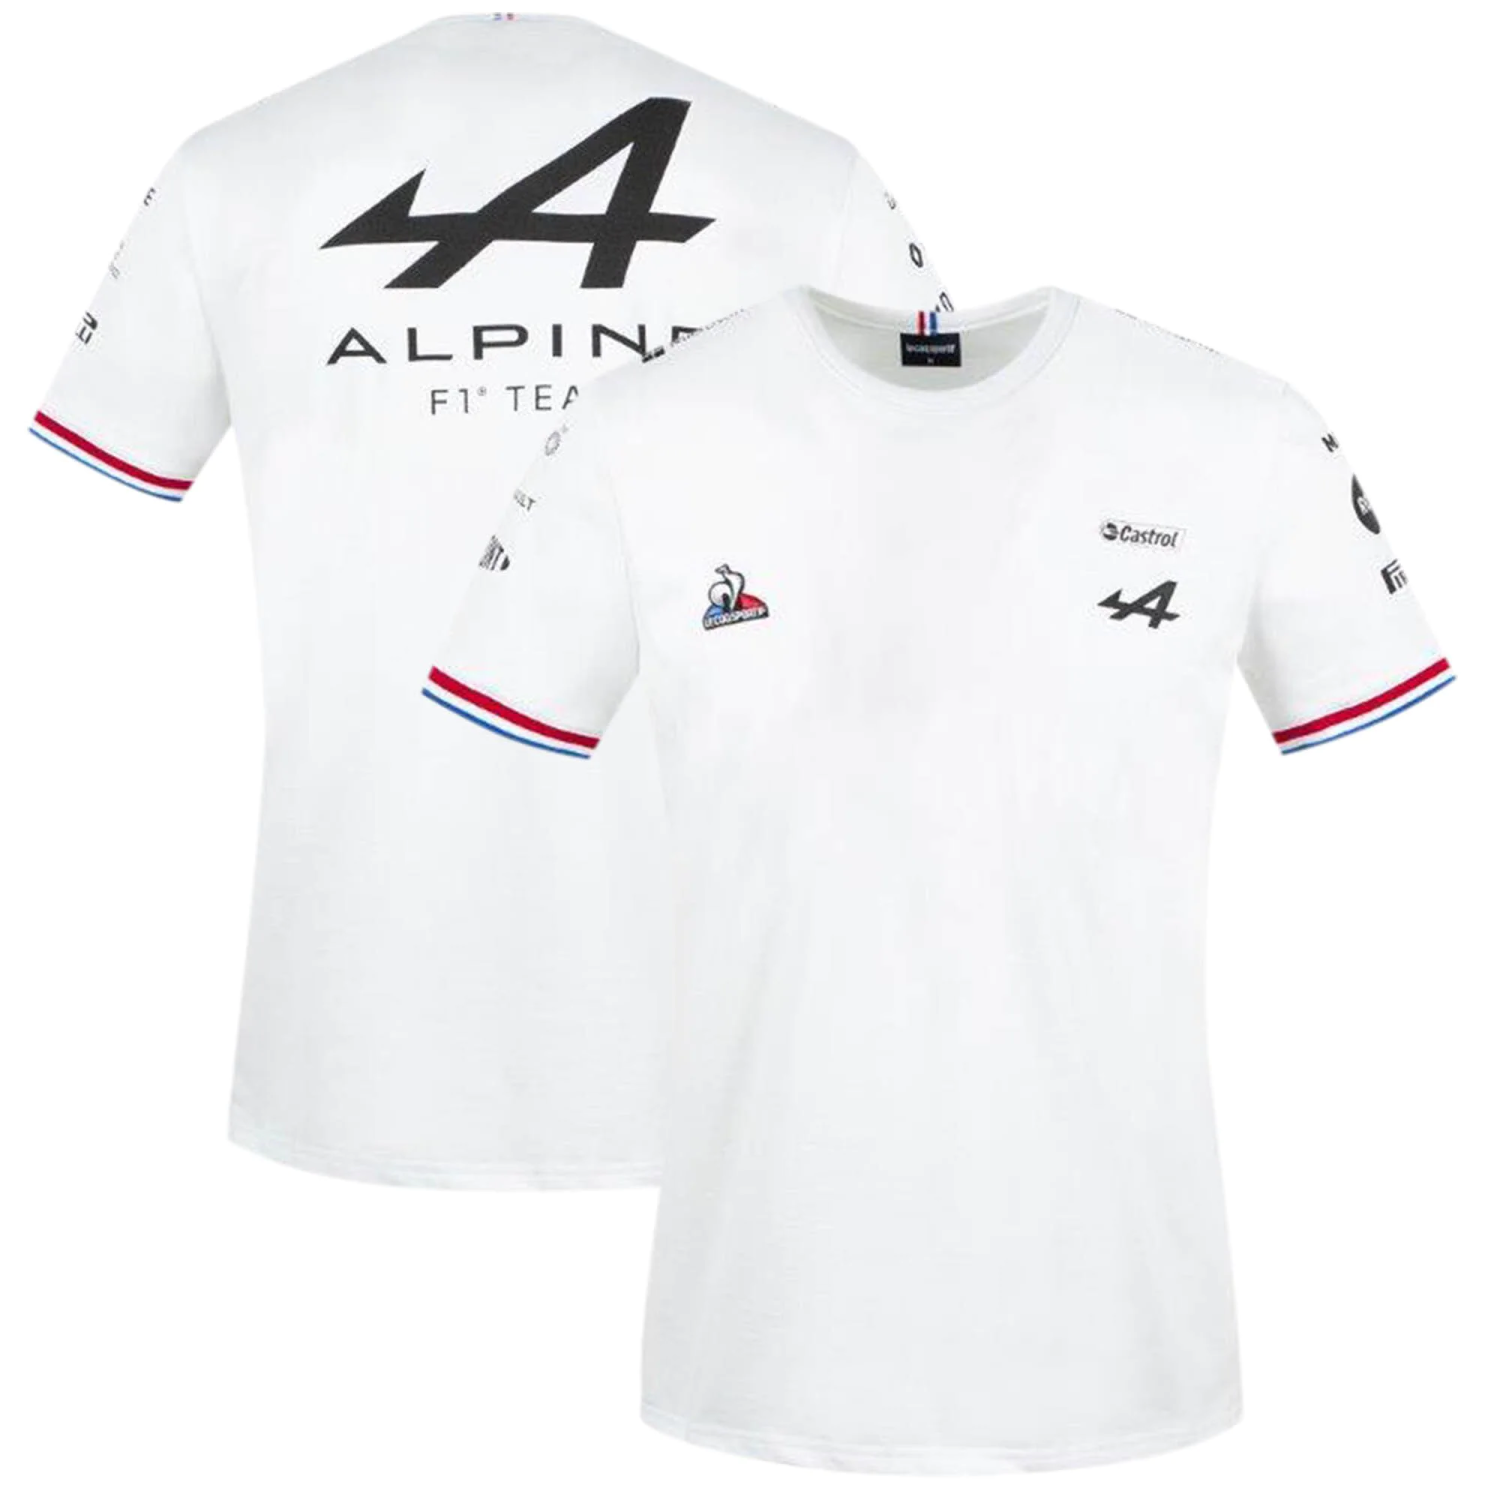 US$ 19.80 - Mens Alpine F1 Team 2021 White T-Shirt - www.fcsoccerworld.com